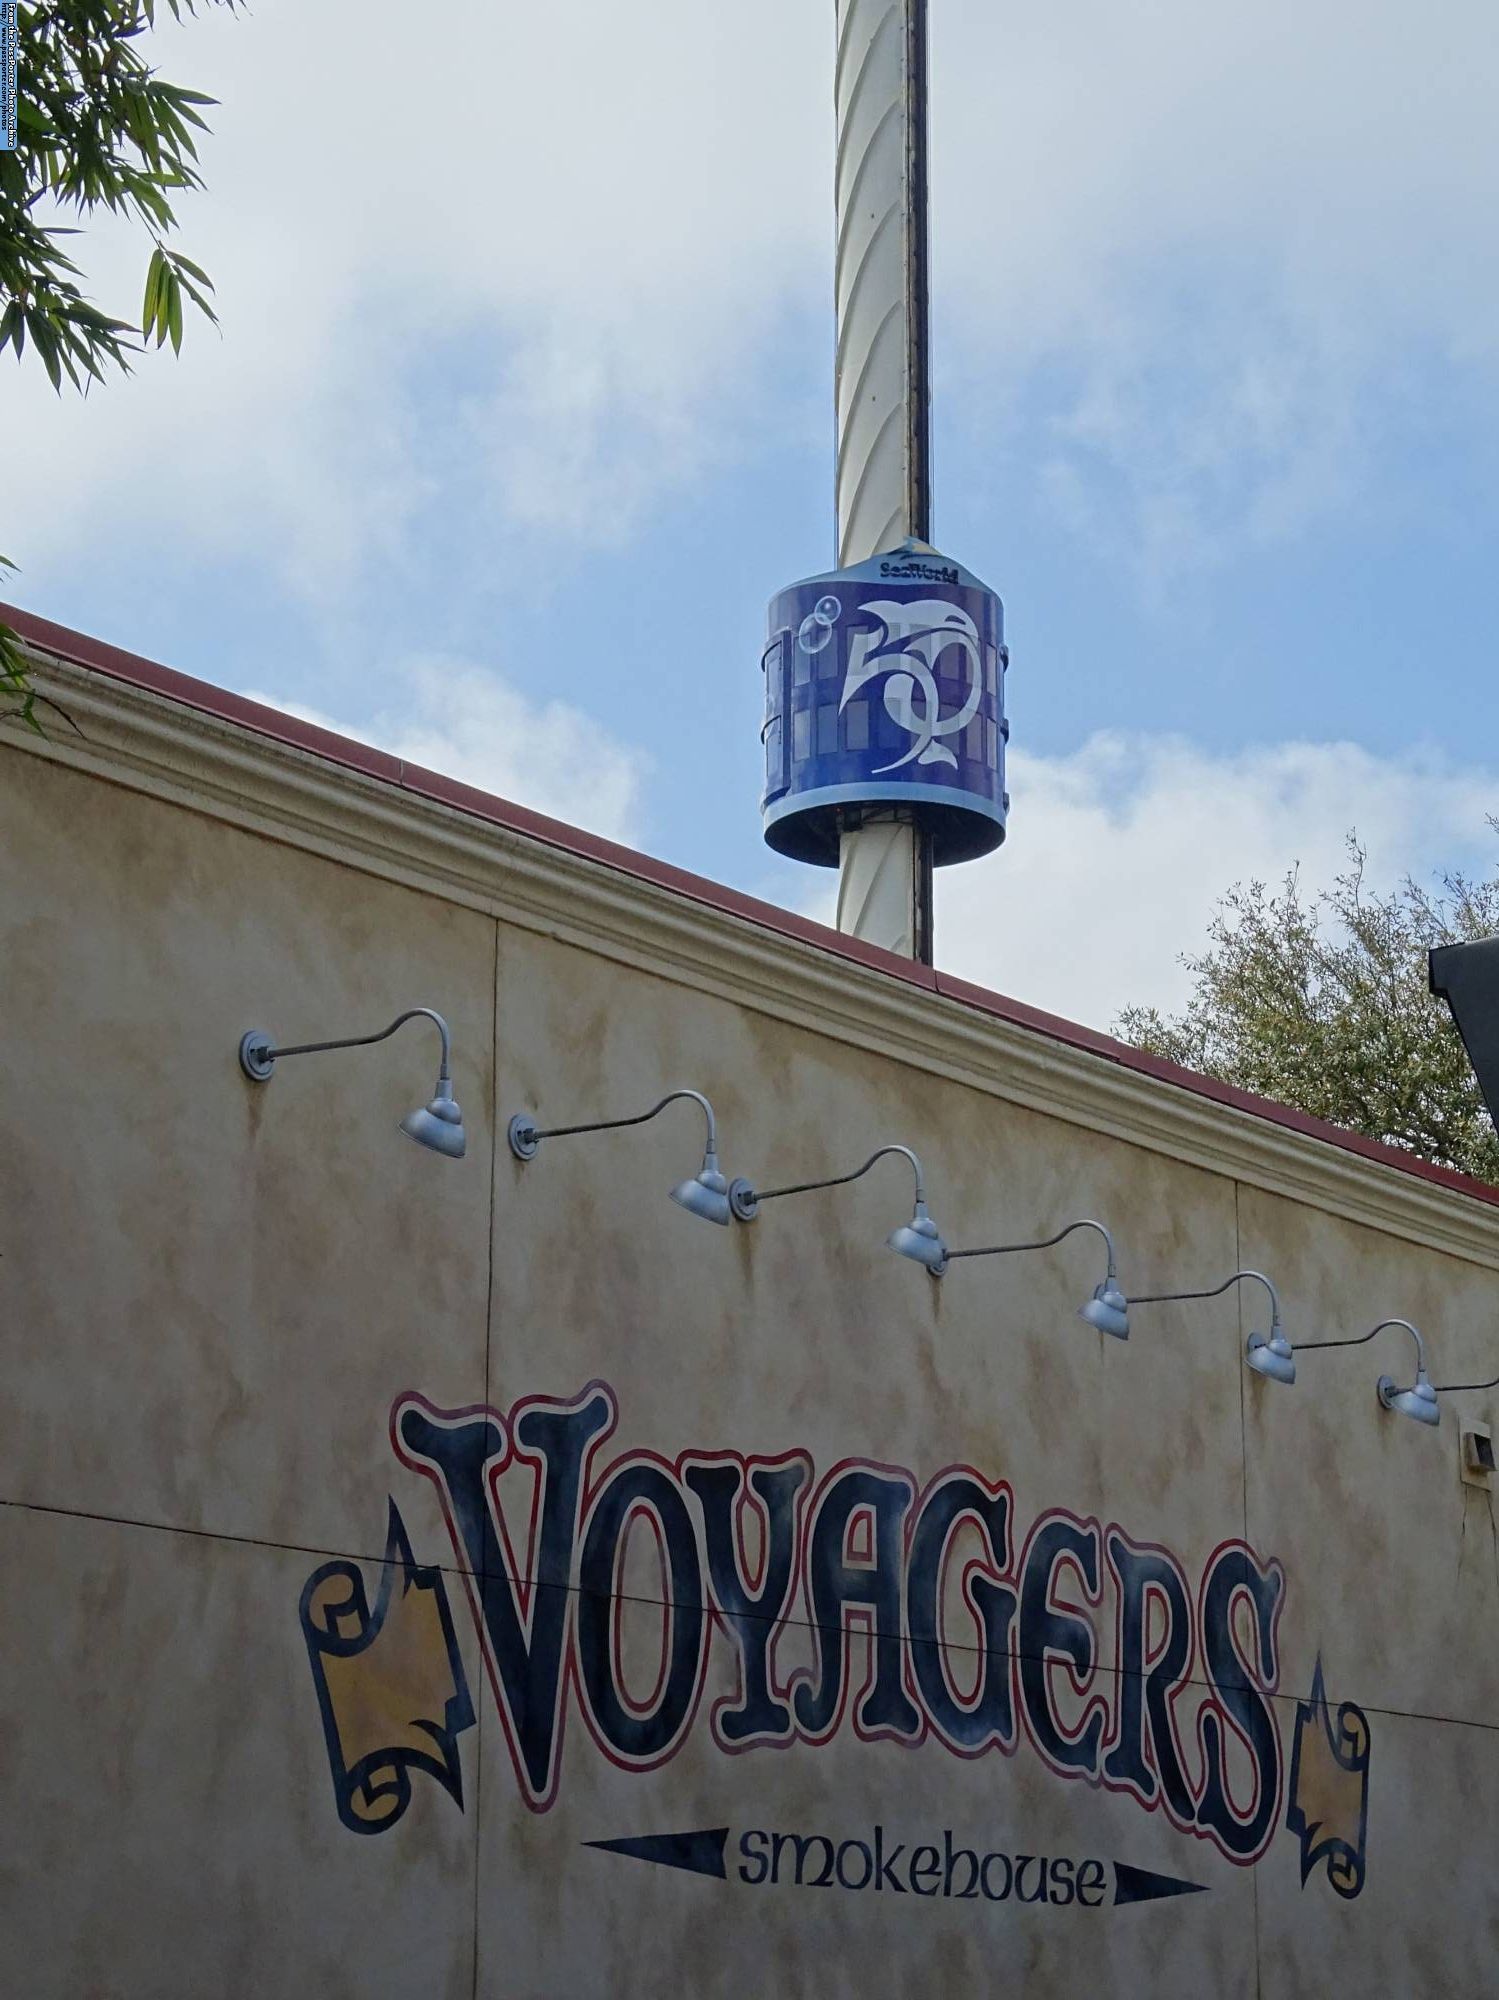 SeaWorld Orlando - Voyagers Smokehouse